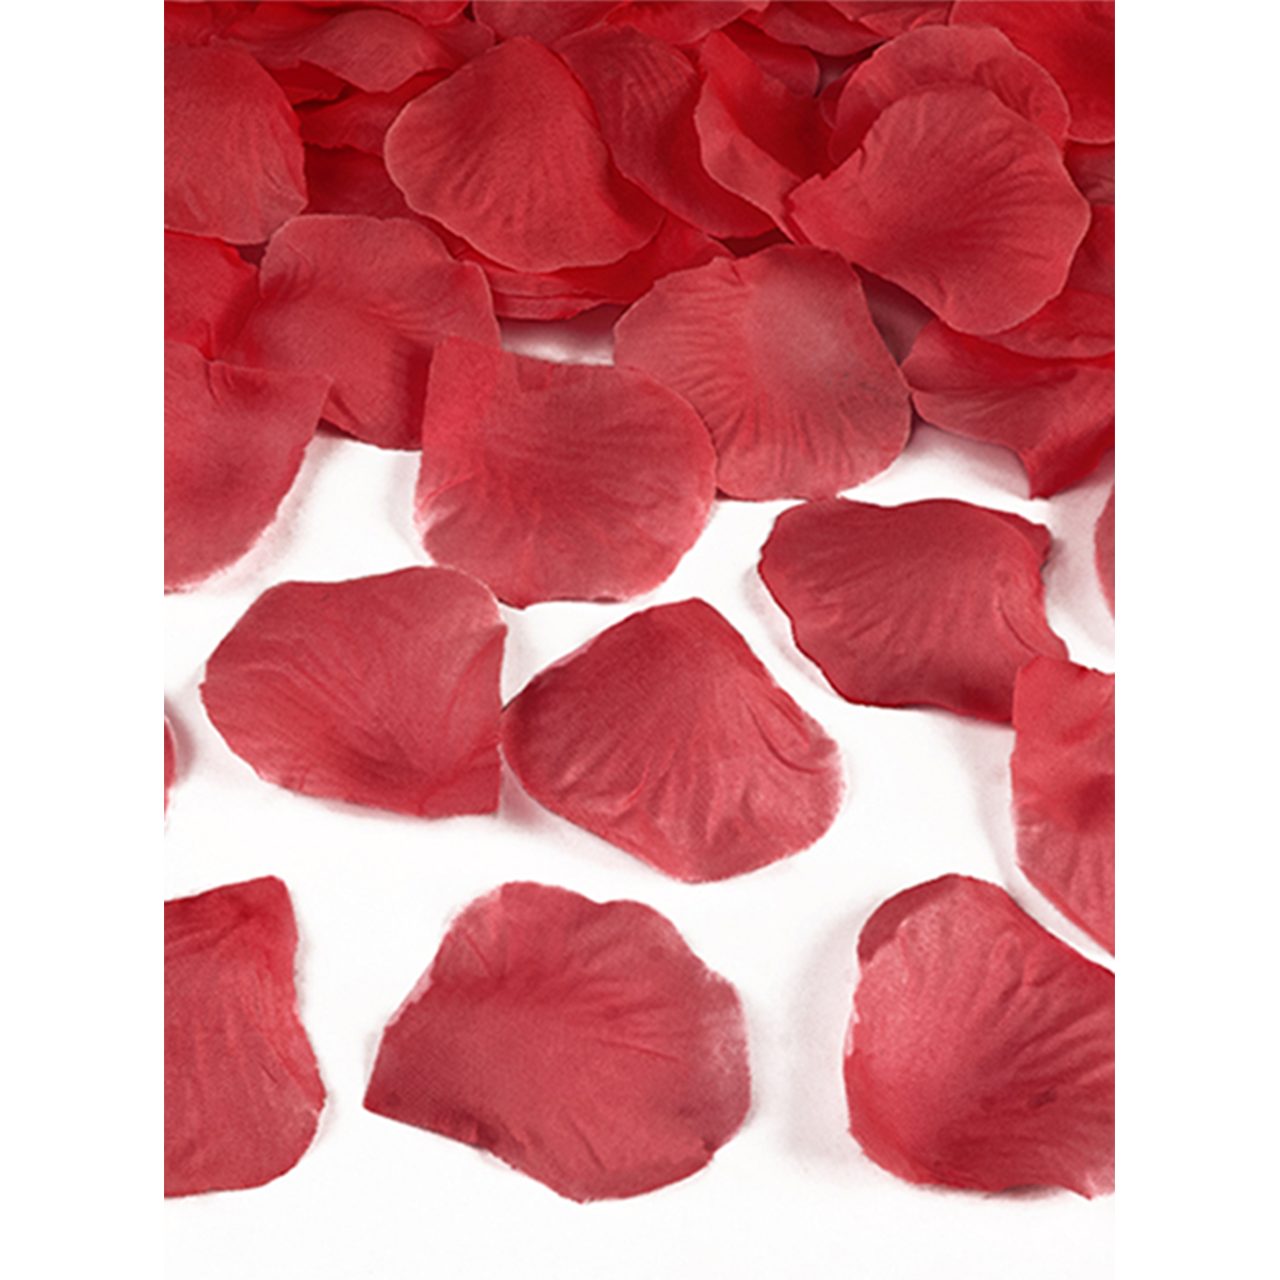 Luftballonwelt Streudeko 100 rote Rosenblätter Rosenblütenblätter Textil Liebe Valentinstag, textile Blütenblätter in rot